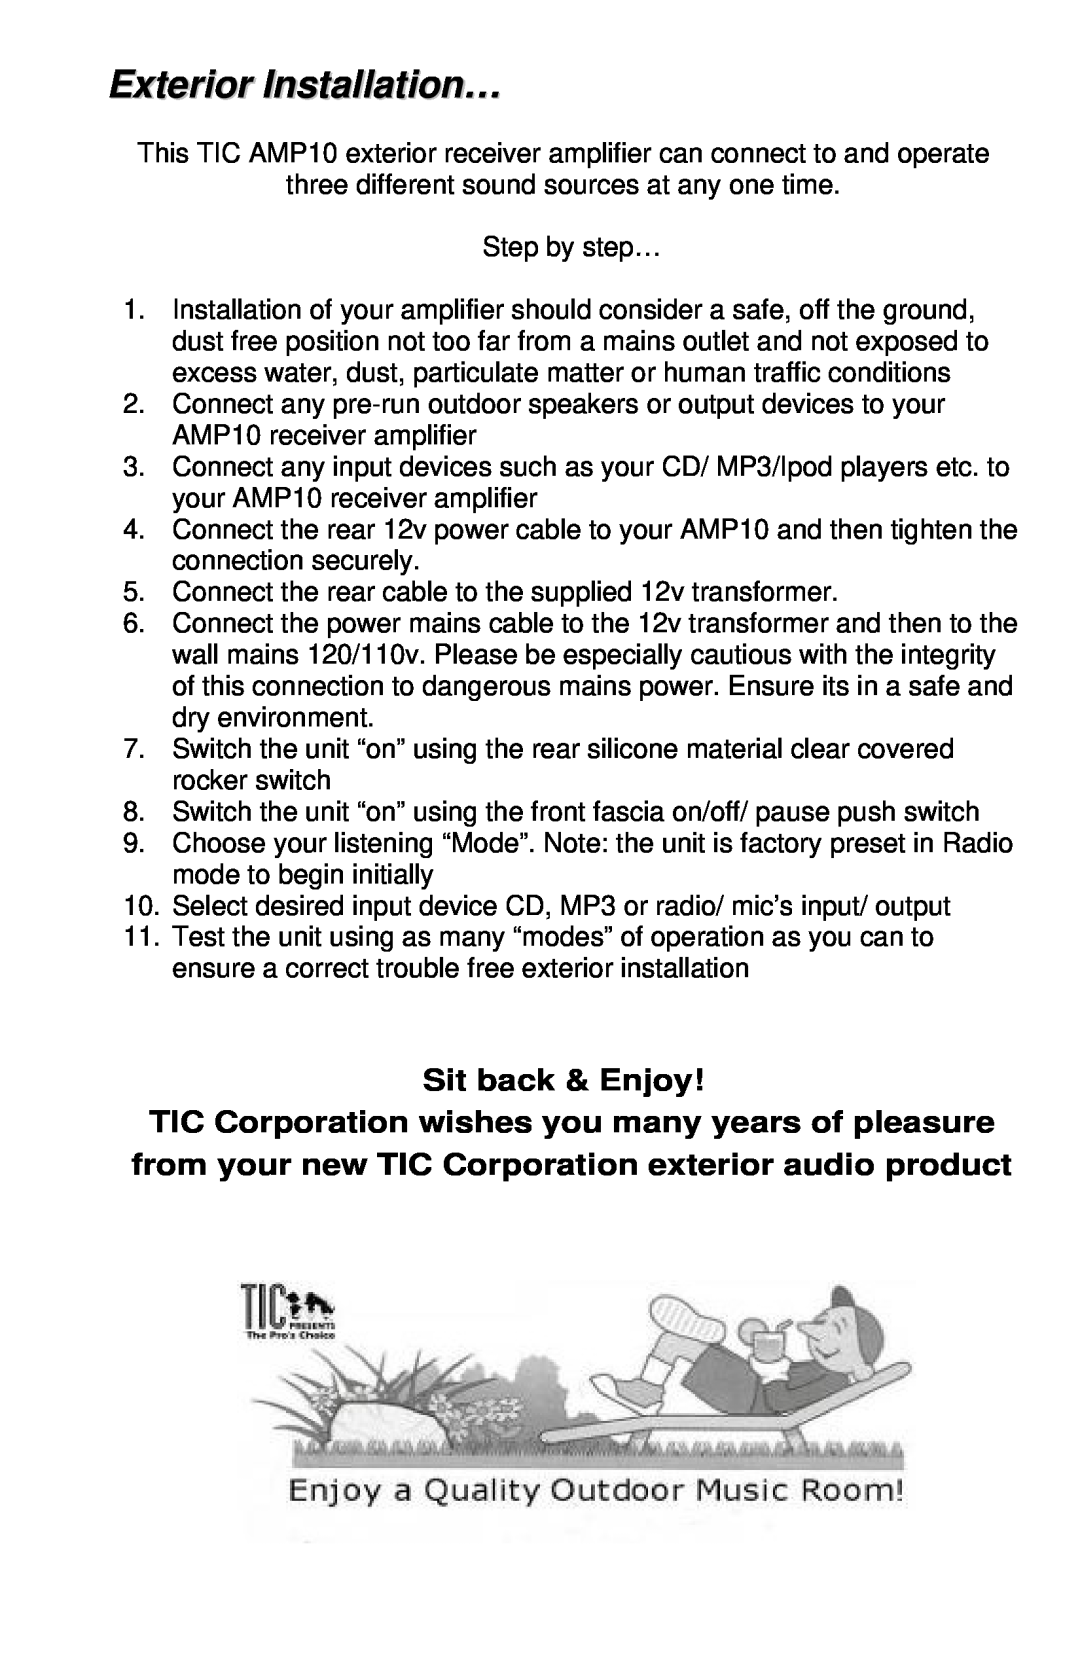 TIC AMP10 manual Exterior Installation…, Sit back & Enjoy 